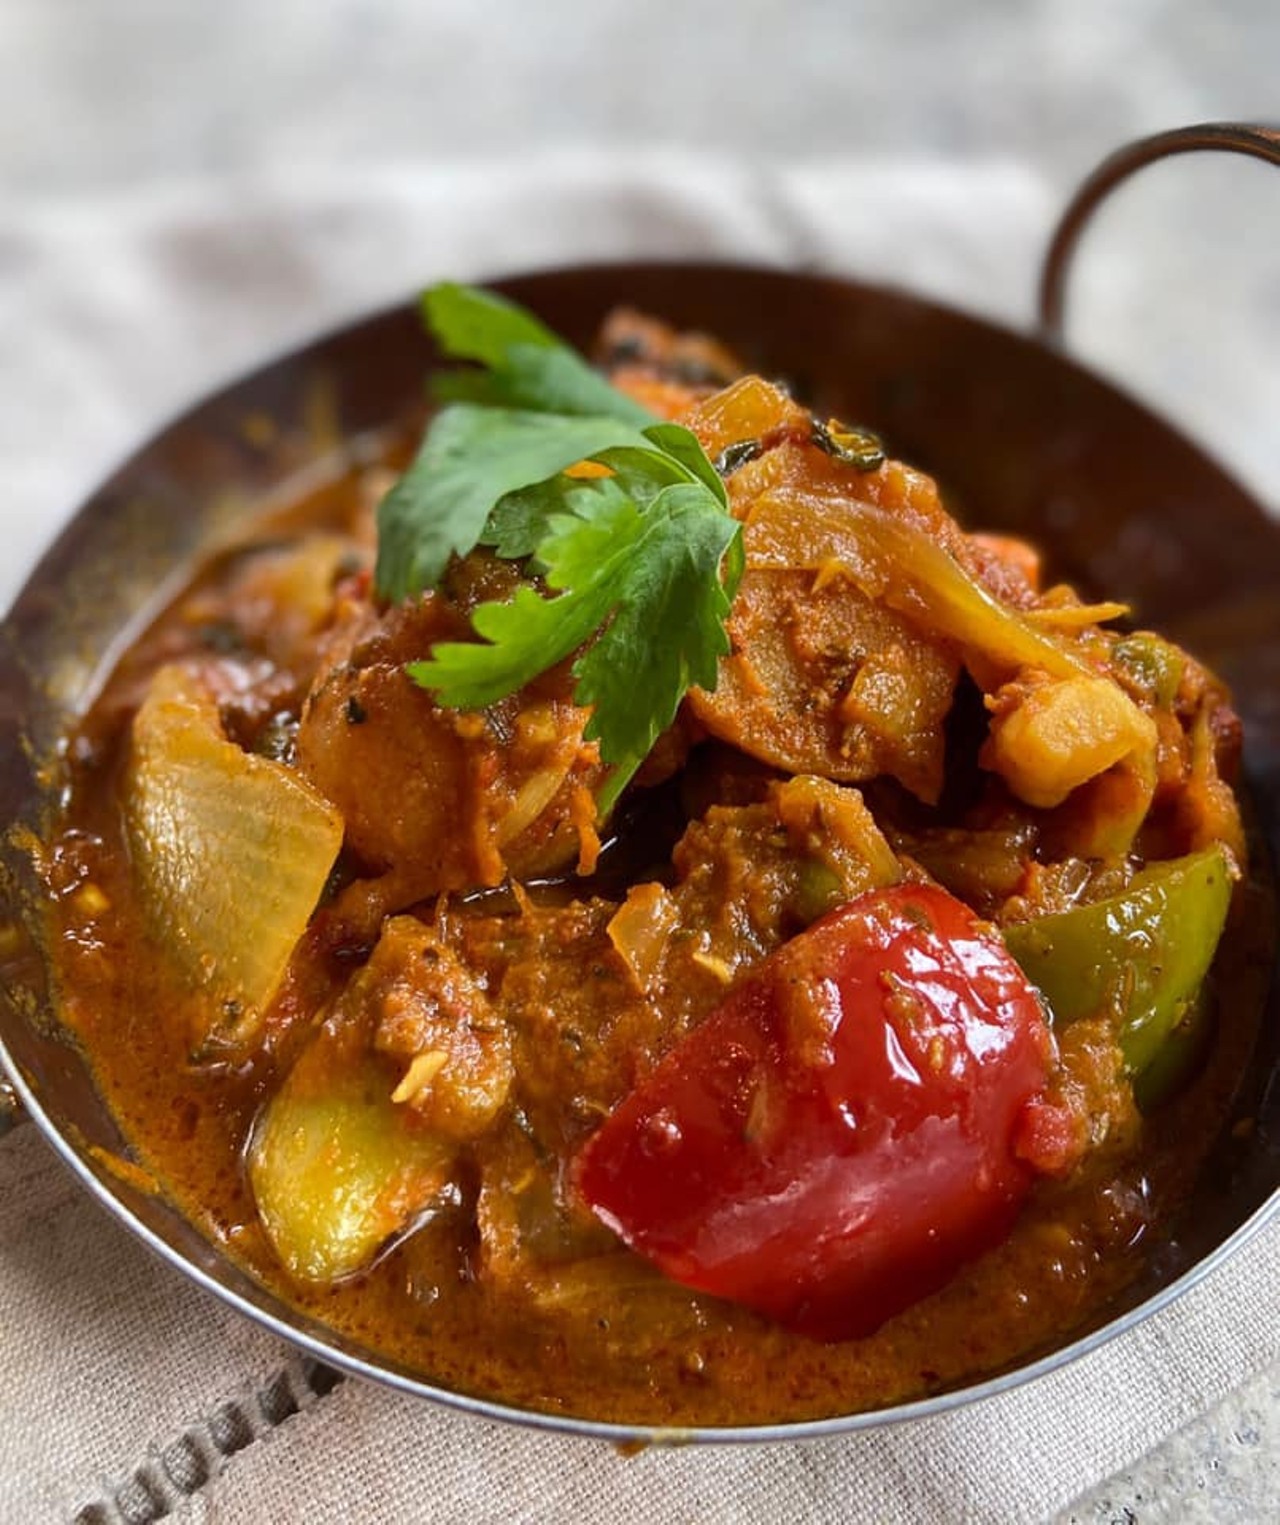 Best Indian Restaurant
Winner: Tamarind Indian Cuisine
Runners-up: Bombay Street Kitchen, Mynt Fine Indian Cuisine